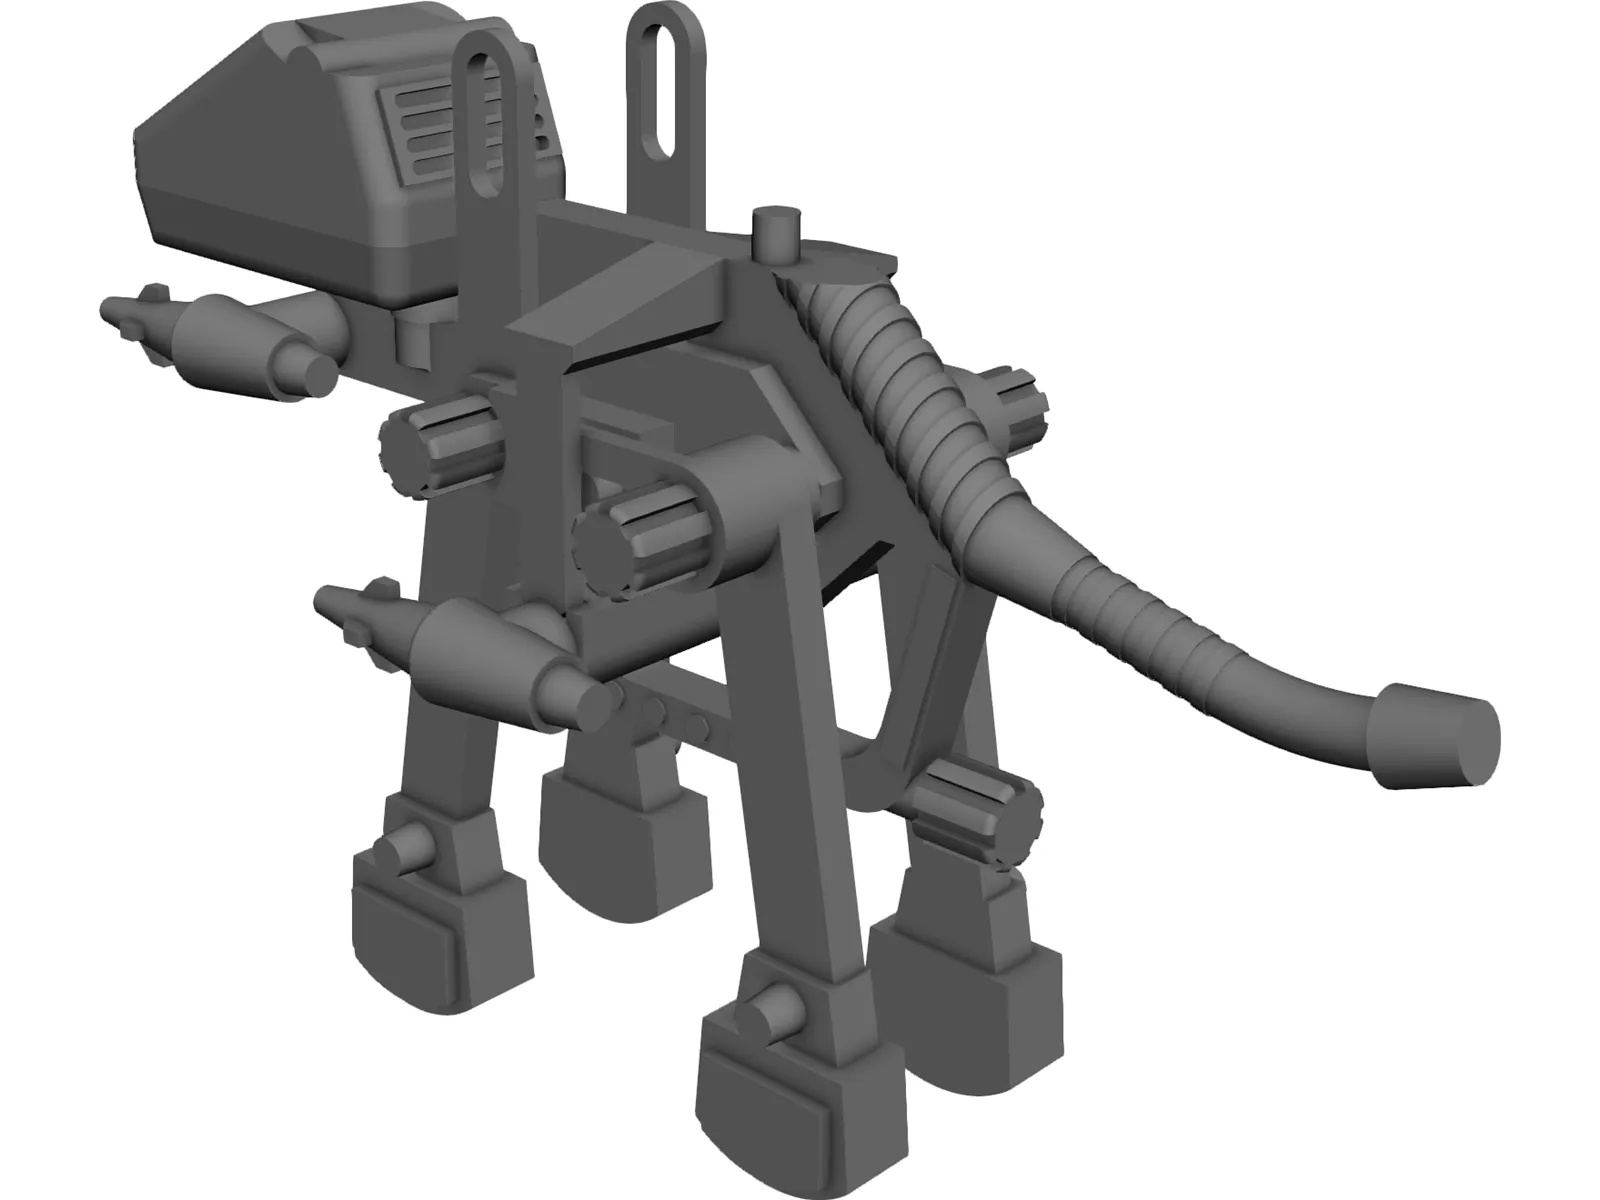 Mechanical Dinosaur Toy 3D Model